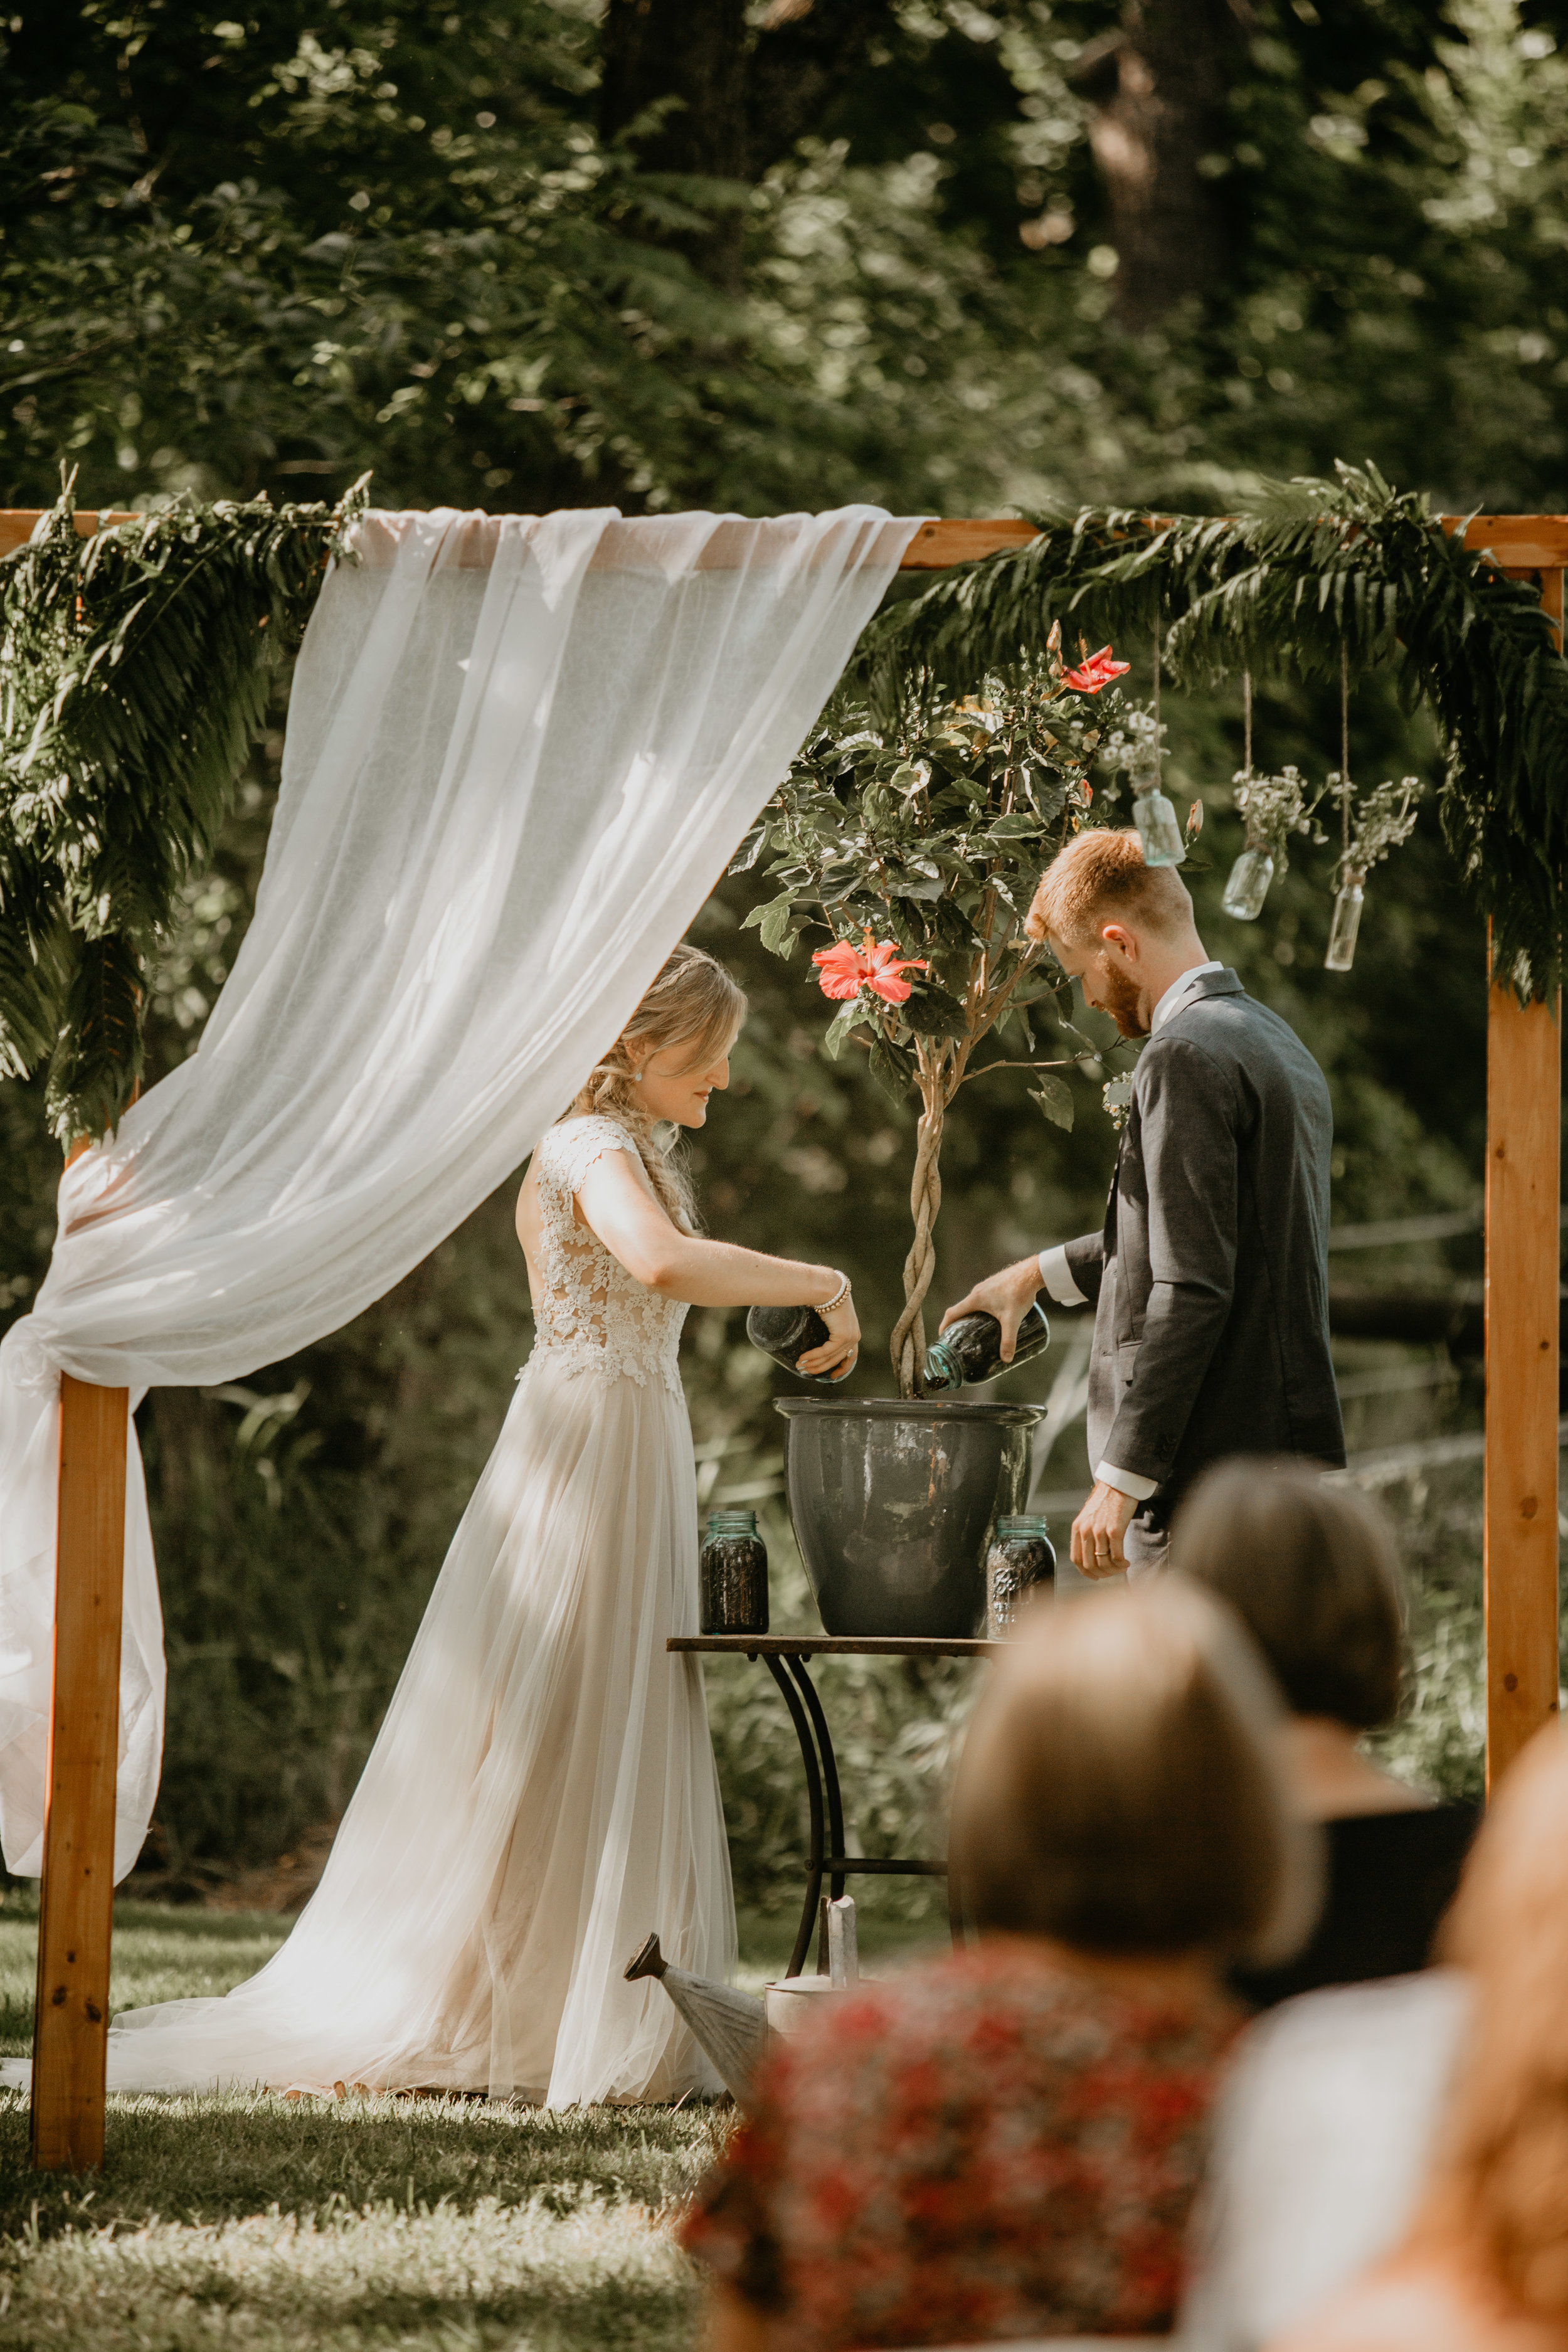 Nicole-Daacke-Photography-pennsylvania-laid-back-outside-backyard-wedding-family-summer-june-maryland-barefoot-bride-woodland-trees-sunset-couple-45.jpg